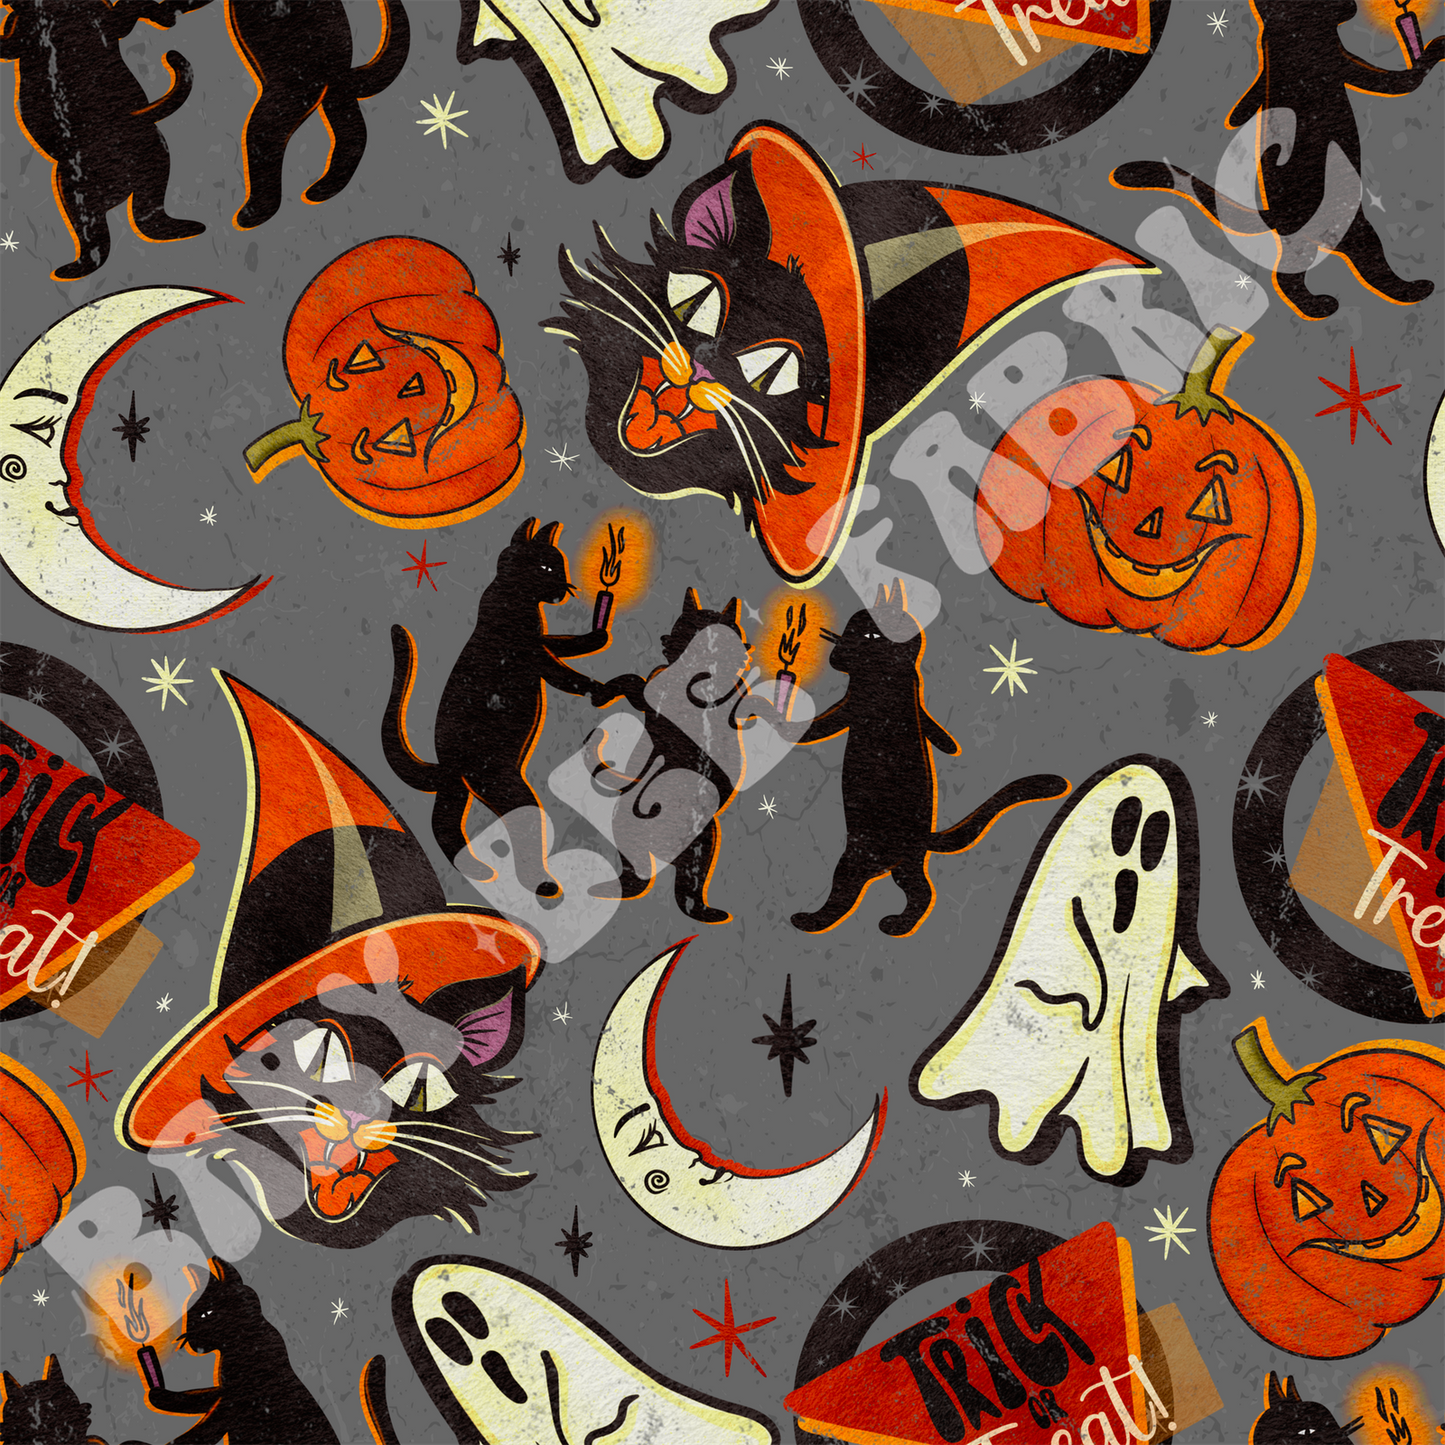 Spooky Cats